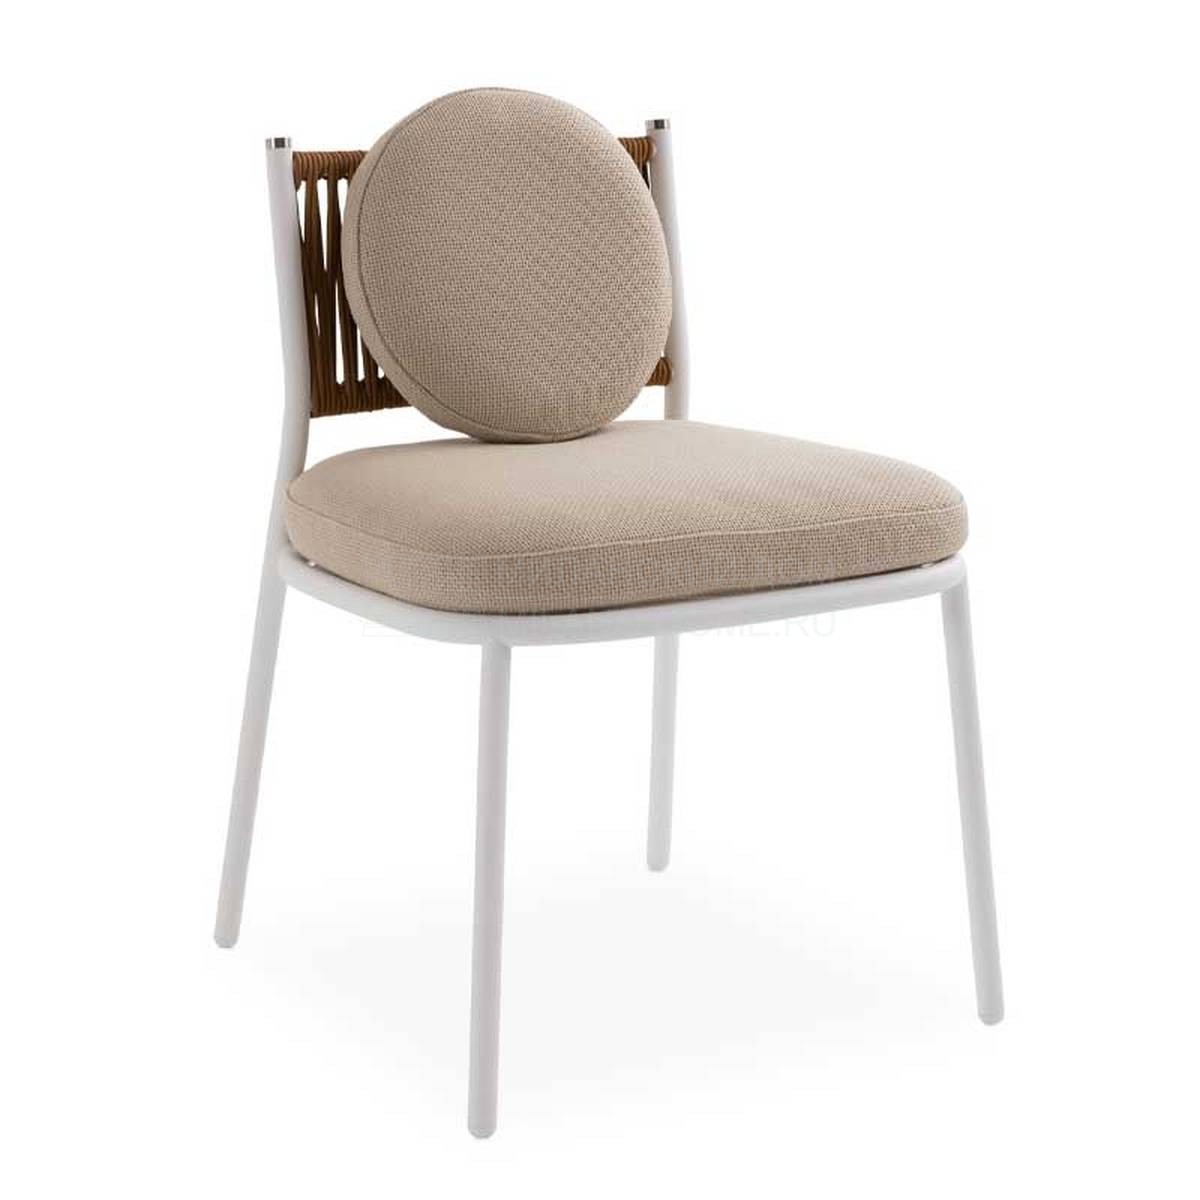 Стул Thea chair из Италии фабрики FENDI Casa